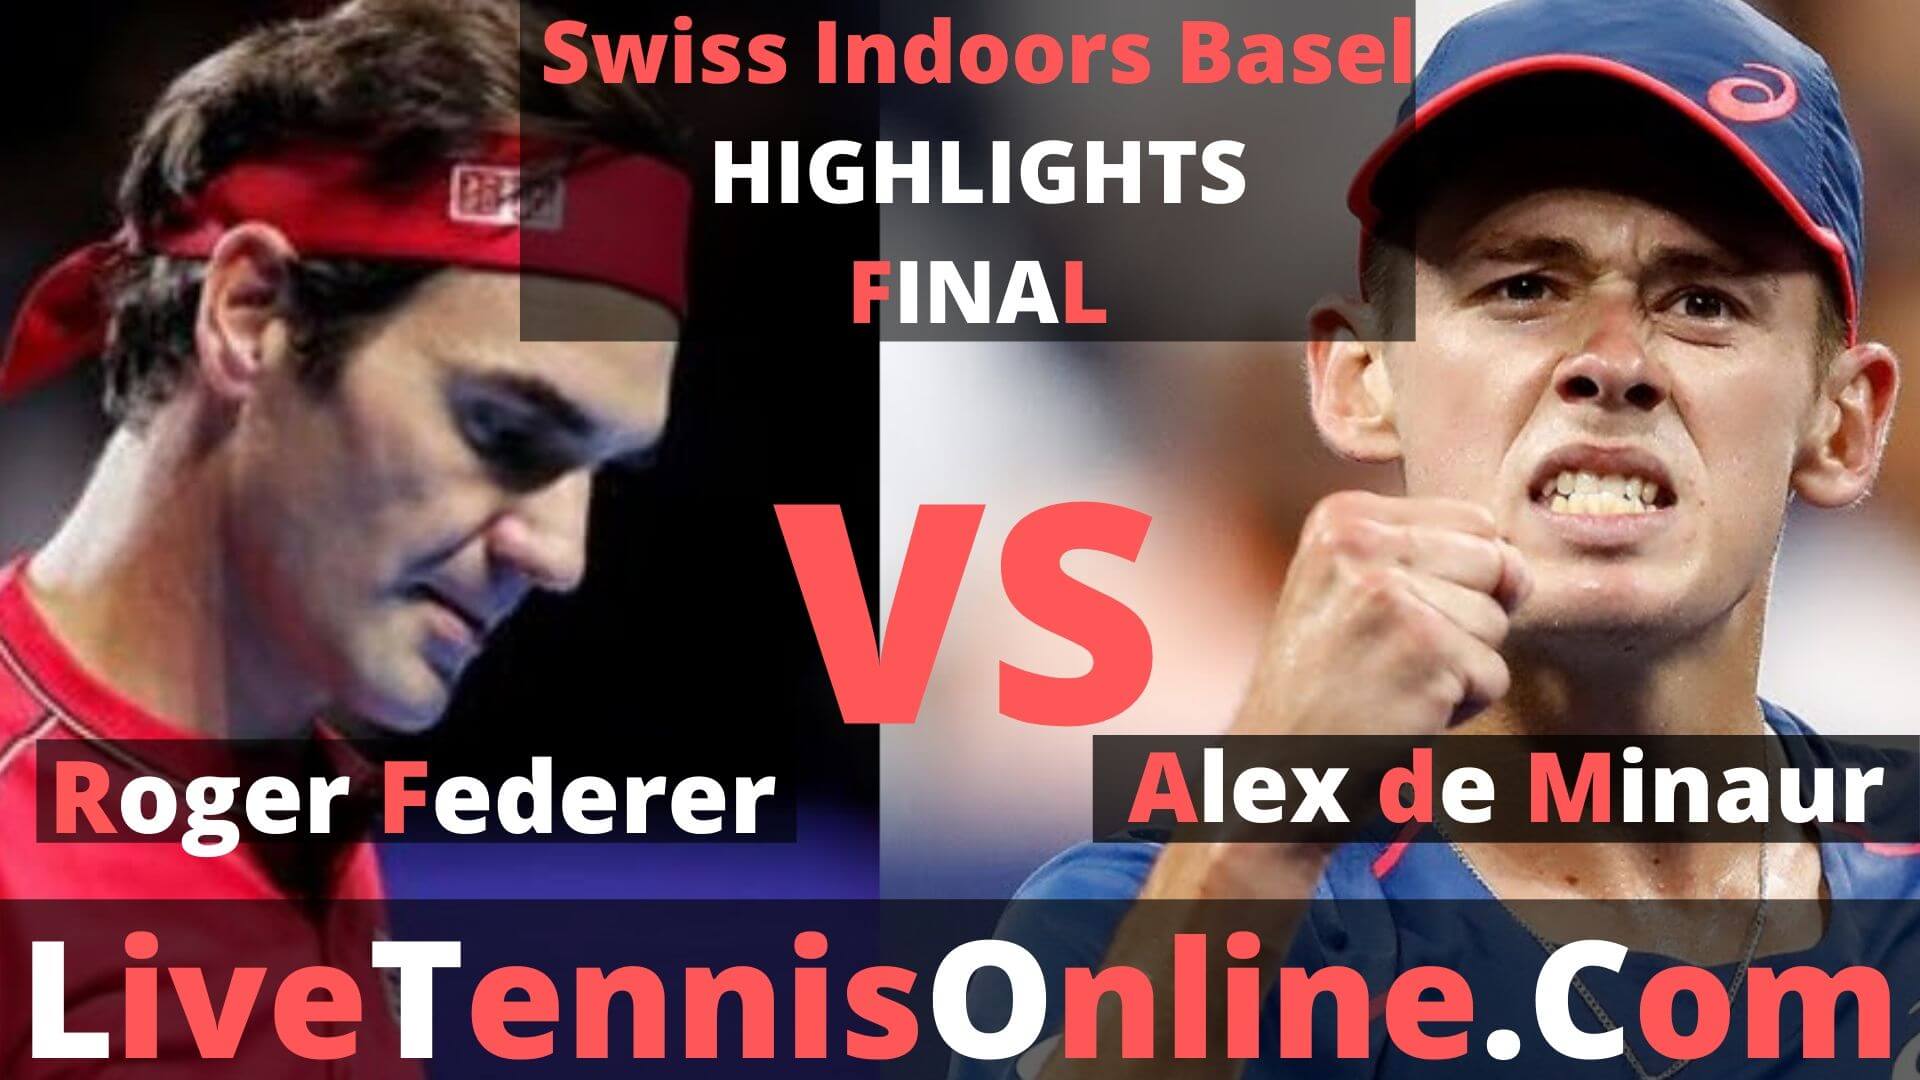 Roger Federer Vs Alex de Minaur Highlights 2019 Swiss Indoors Basel Final